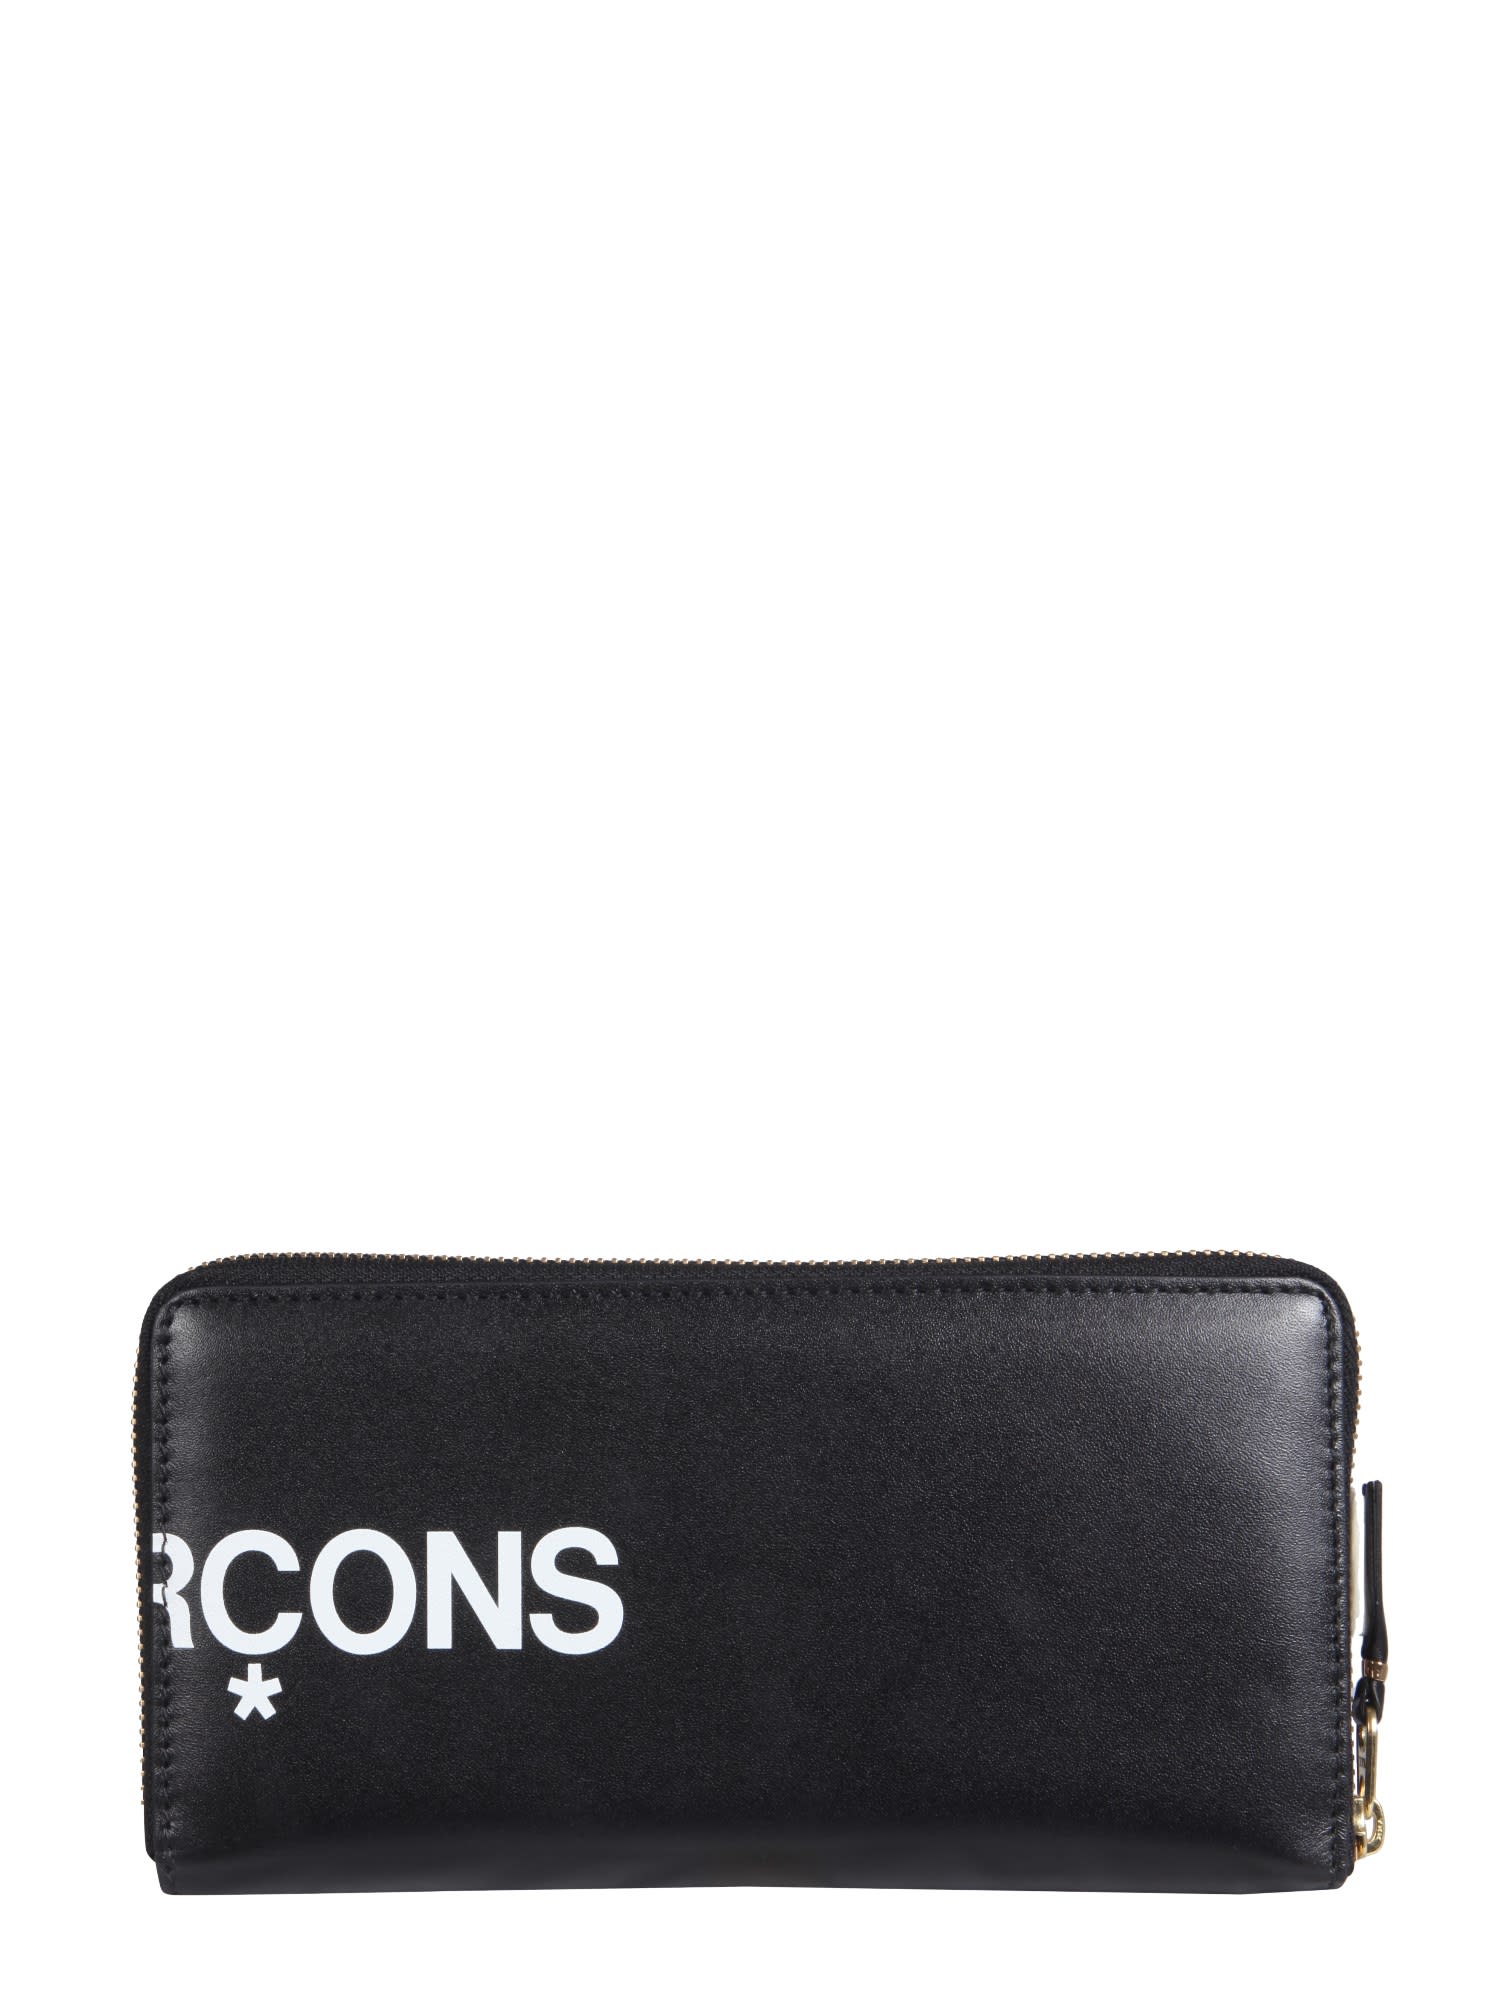 Shop Comme Des Garçons Wallet With Zip In Black